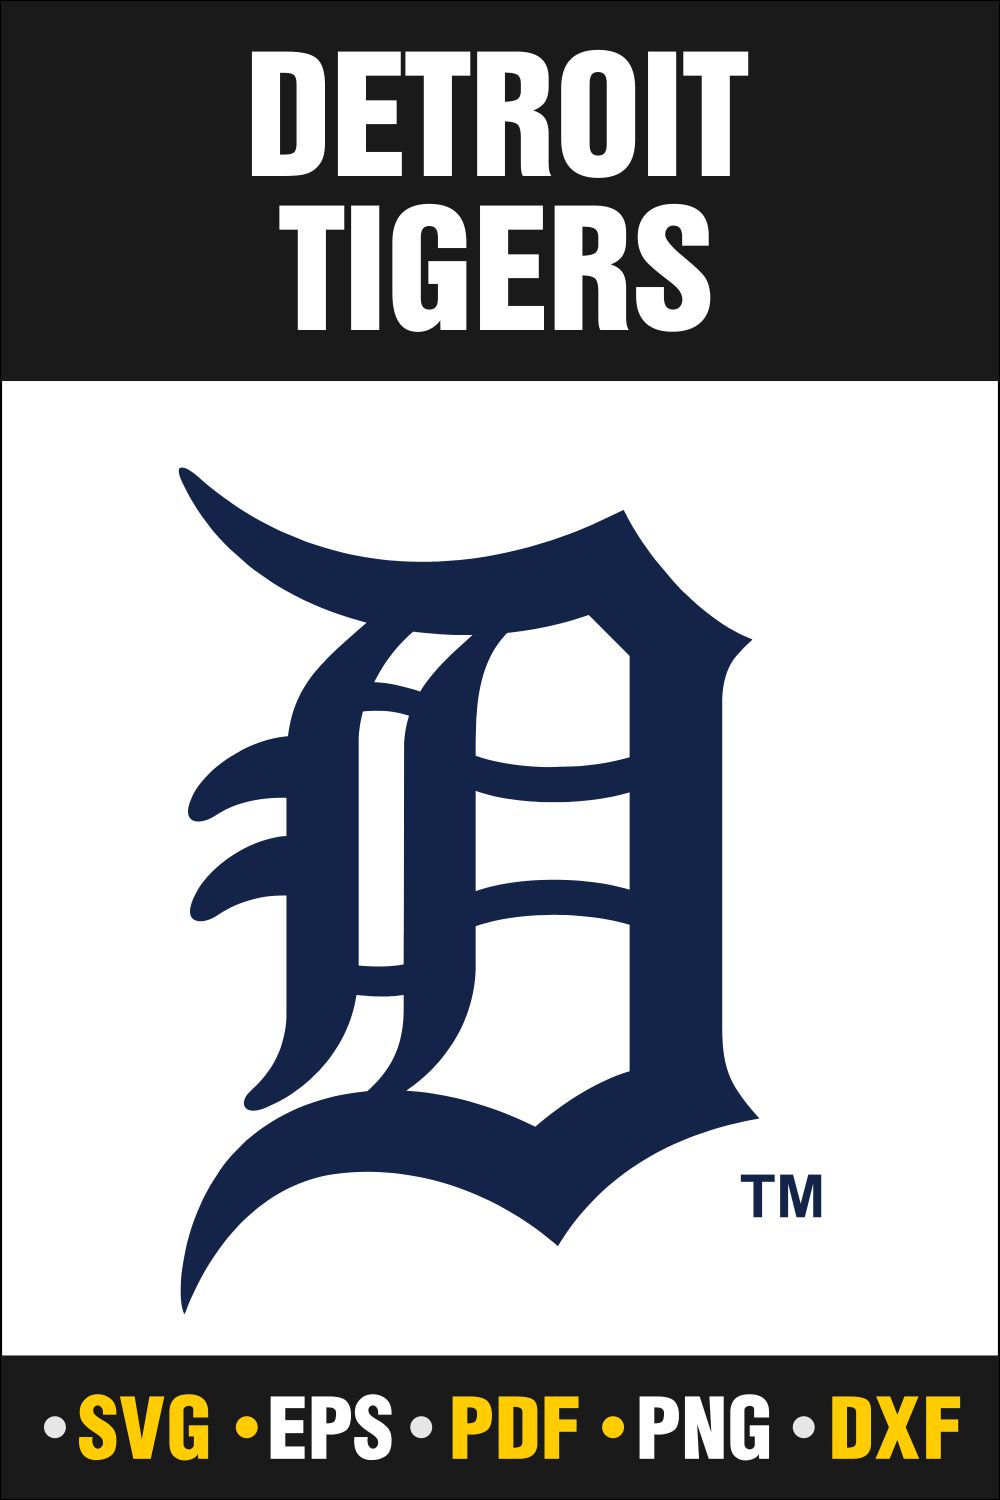 Detroit Tigers - Baseball Sports Vector SVG Logo in 5 formats